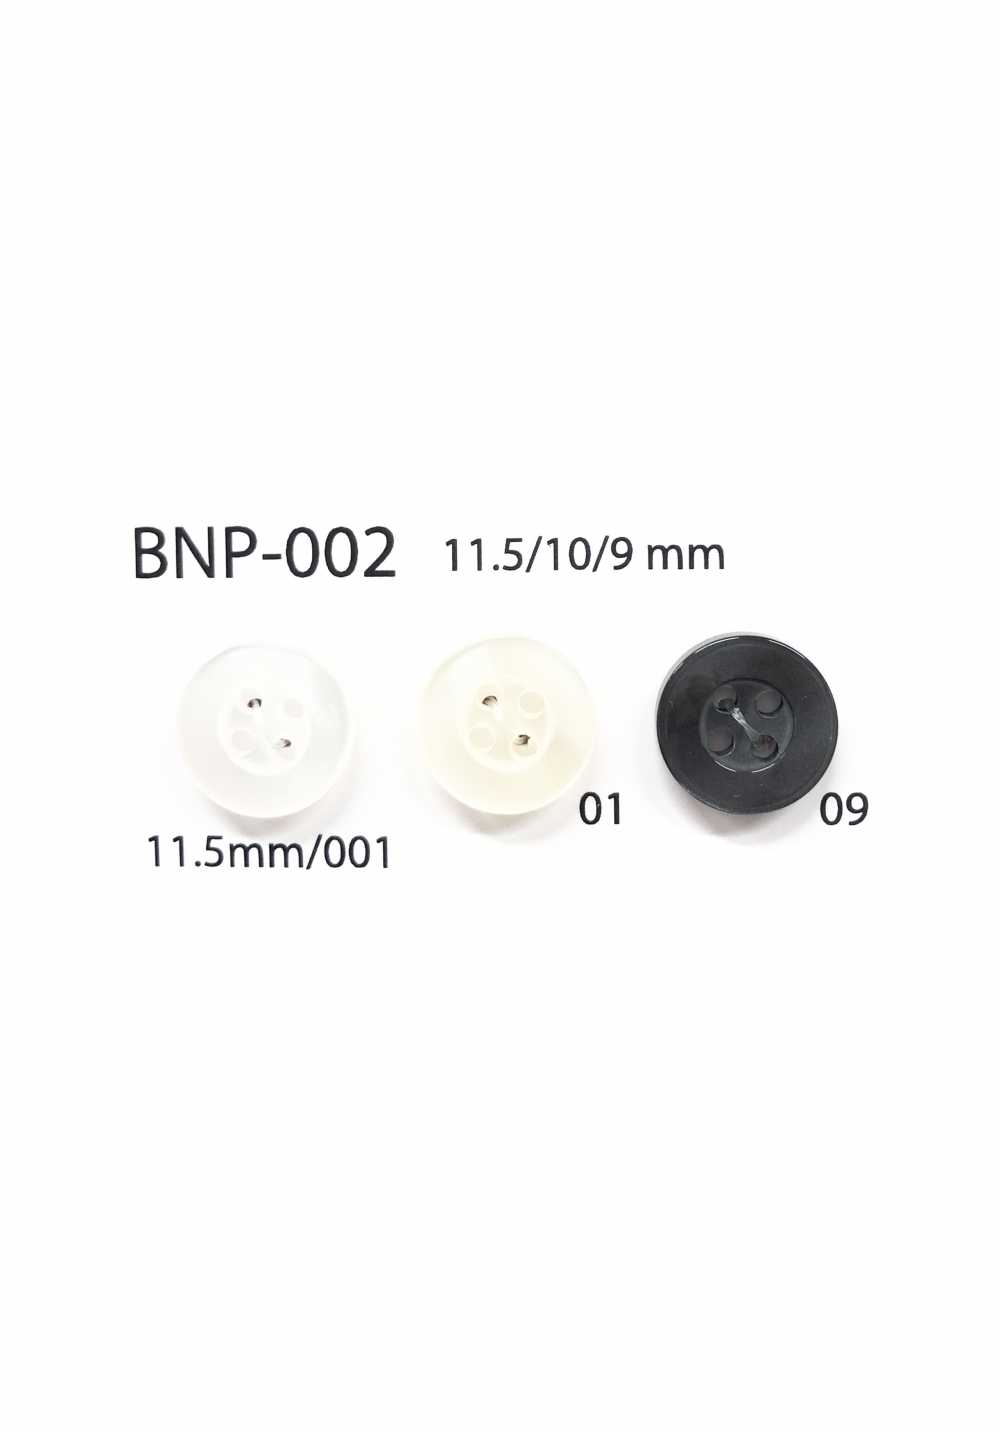 BNP-002 Bouton Biopolyester 4 Trous IRIS